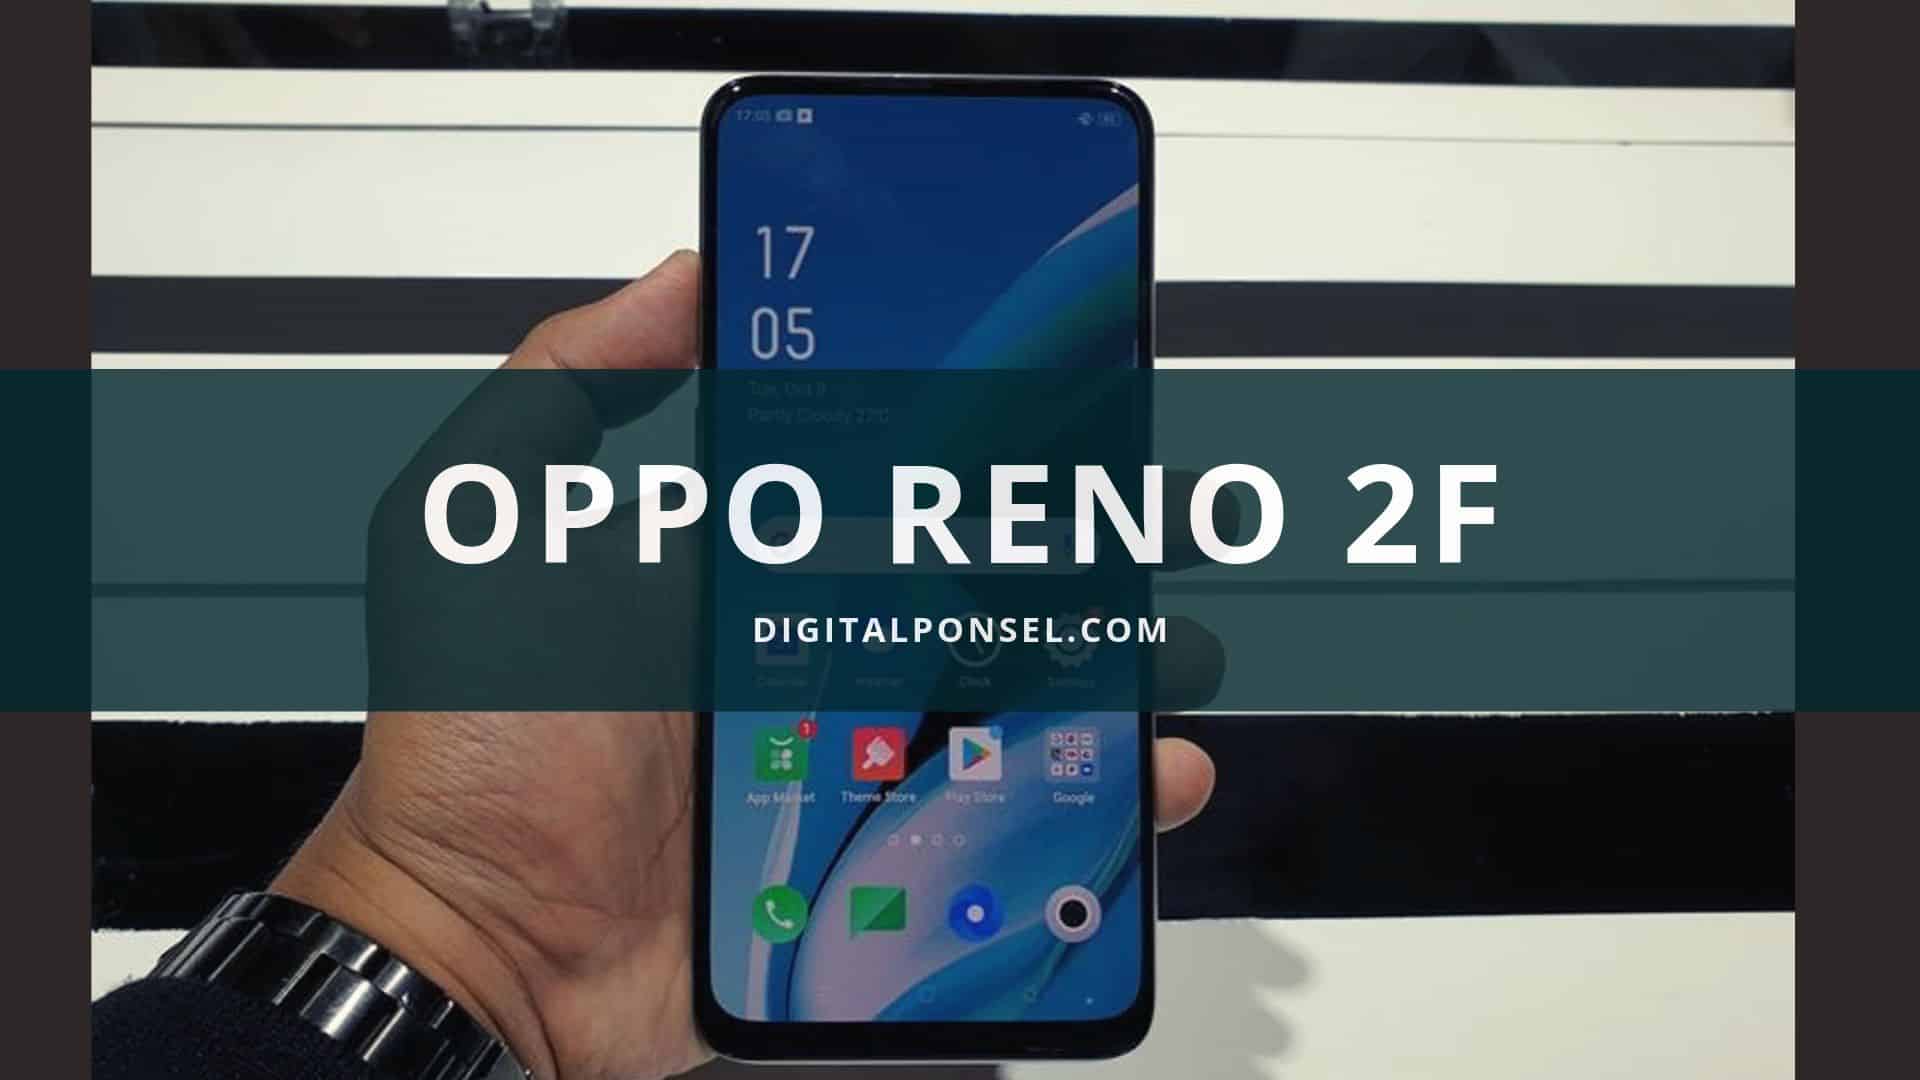 OPPO Reno 2F